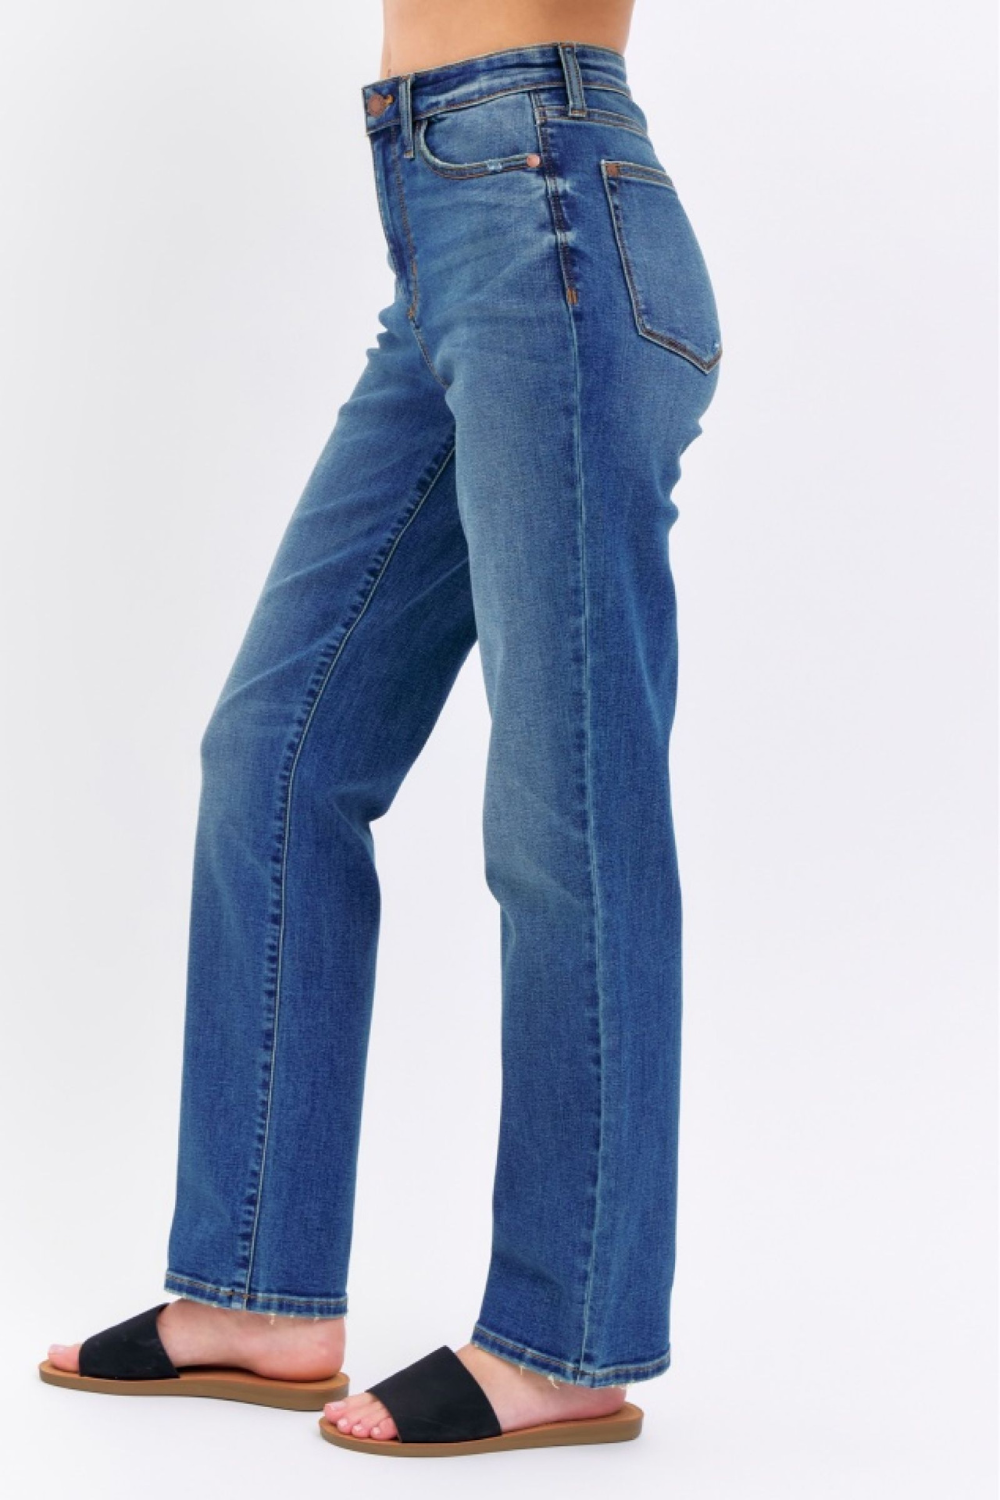 Judy Blue High Waist Straight Fit Jeans